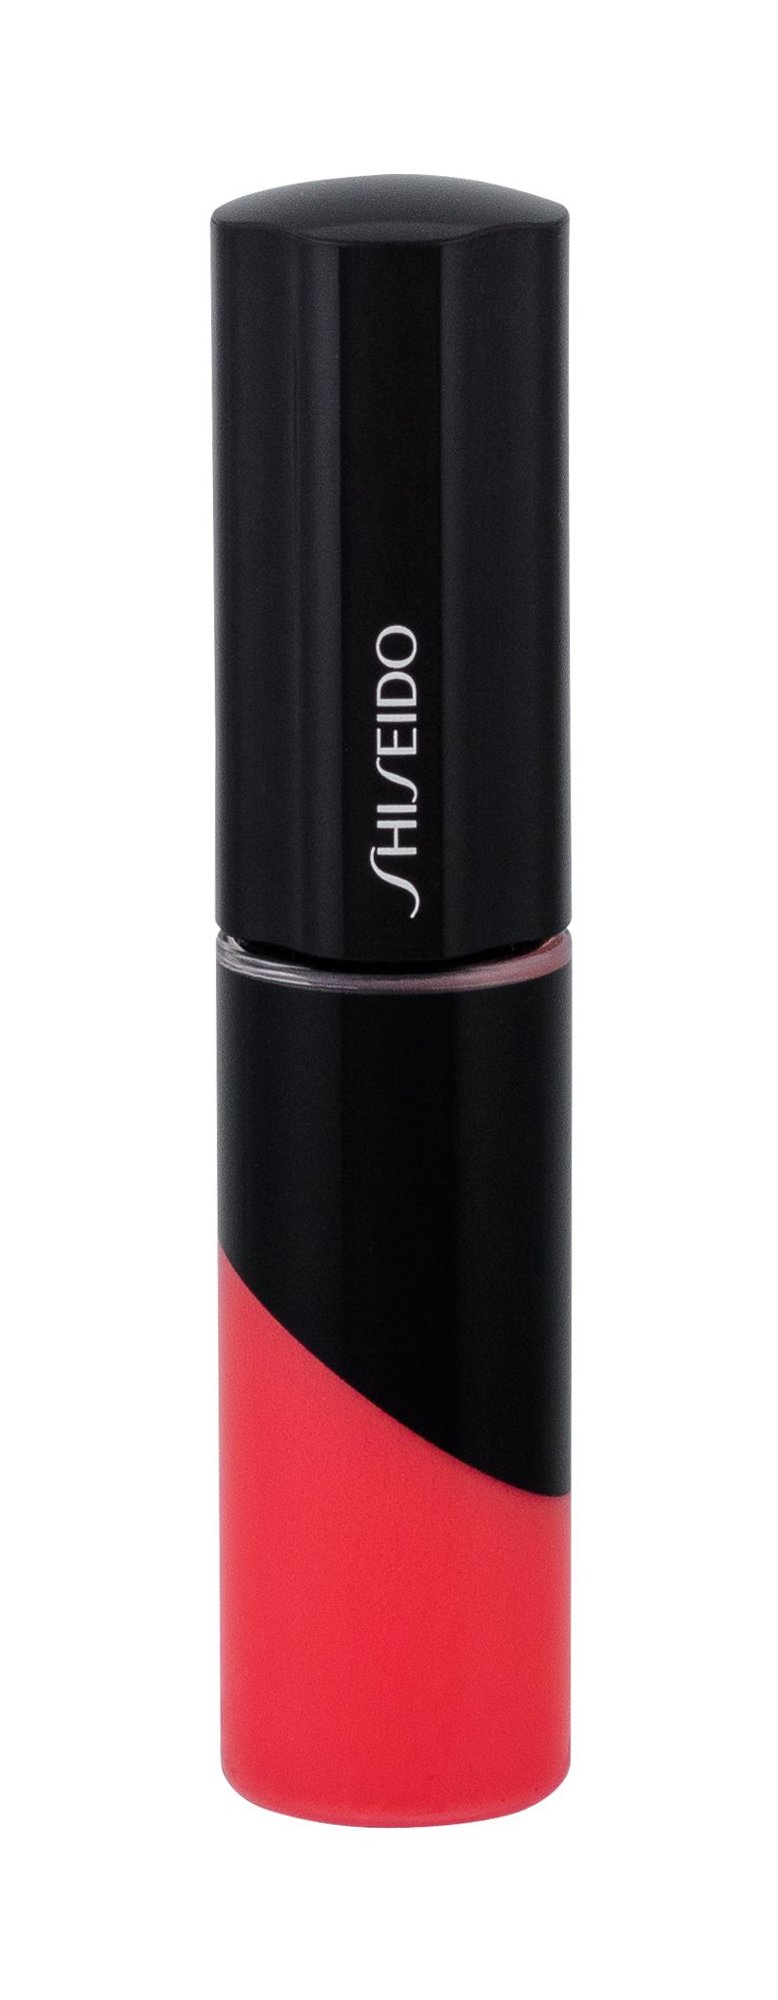 Shiseido Lacquer Gloss lūpų blizgesys